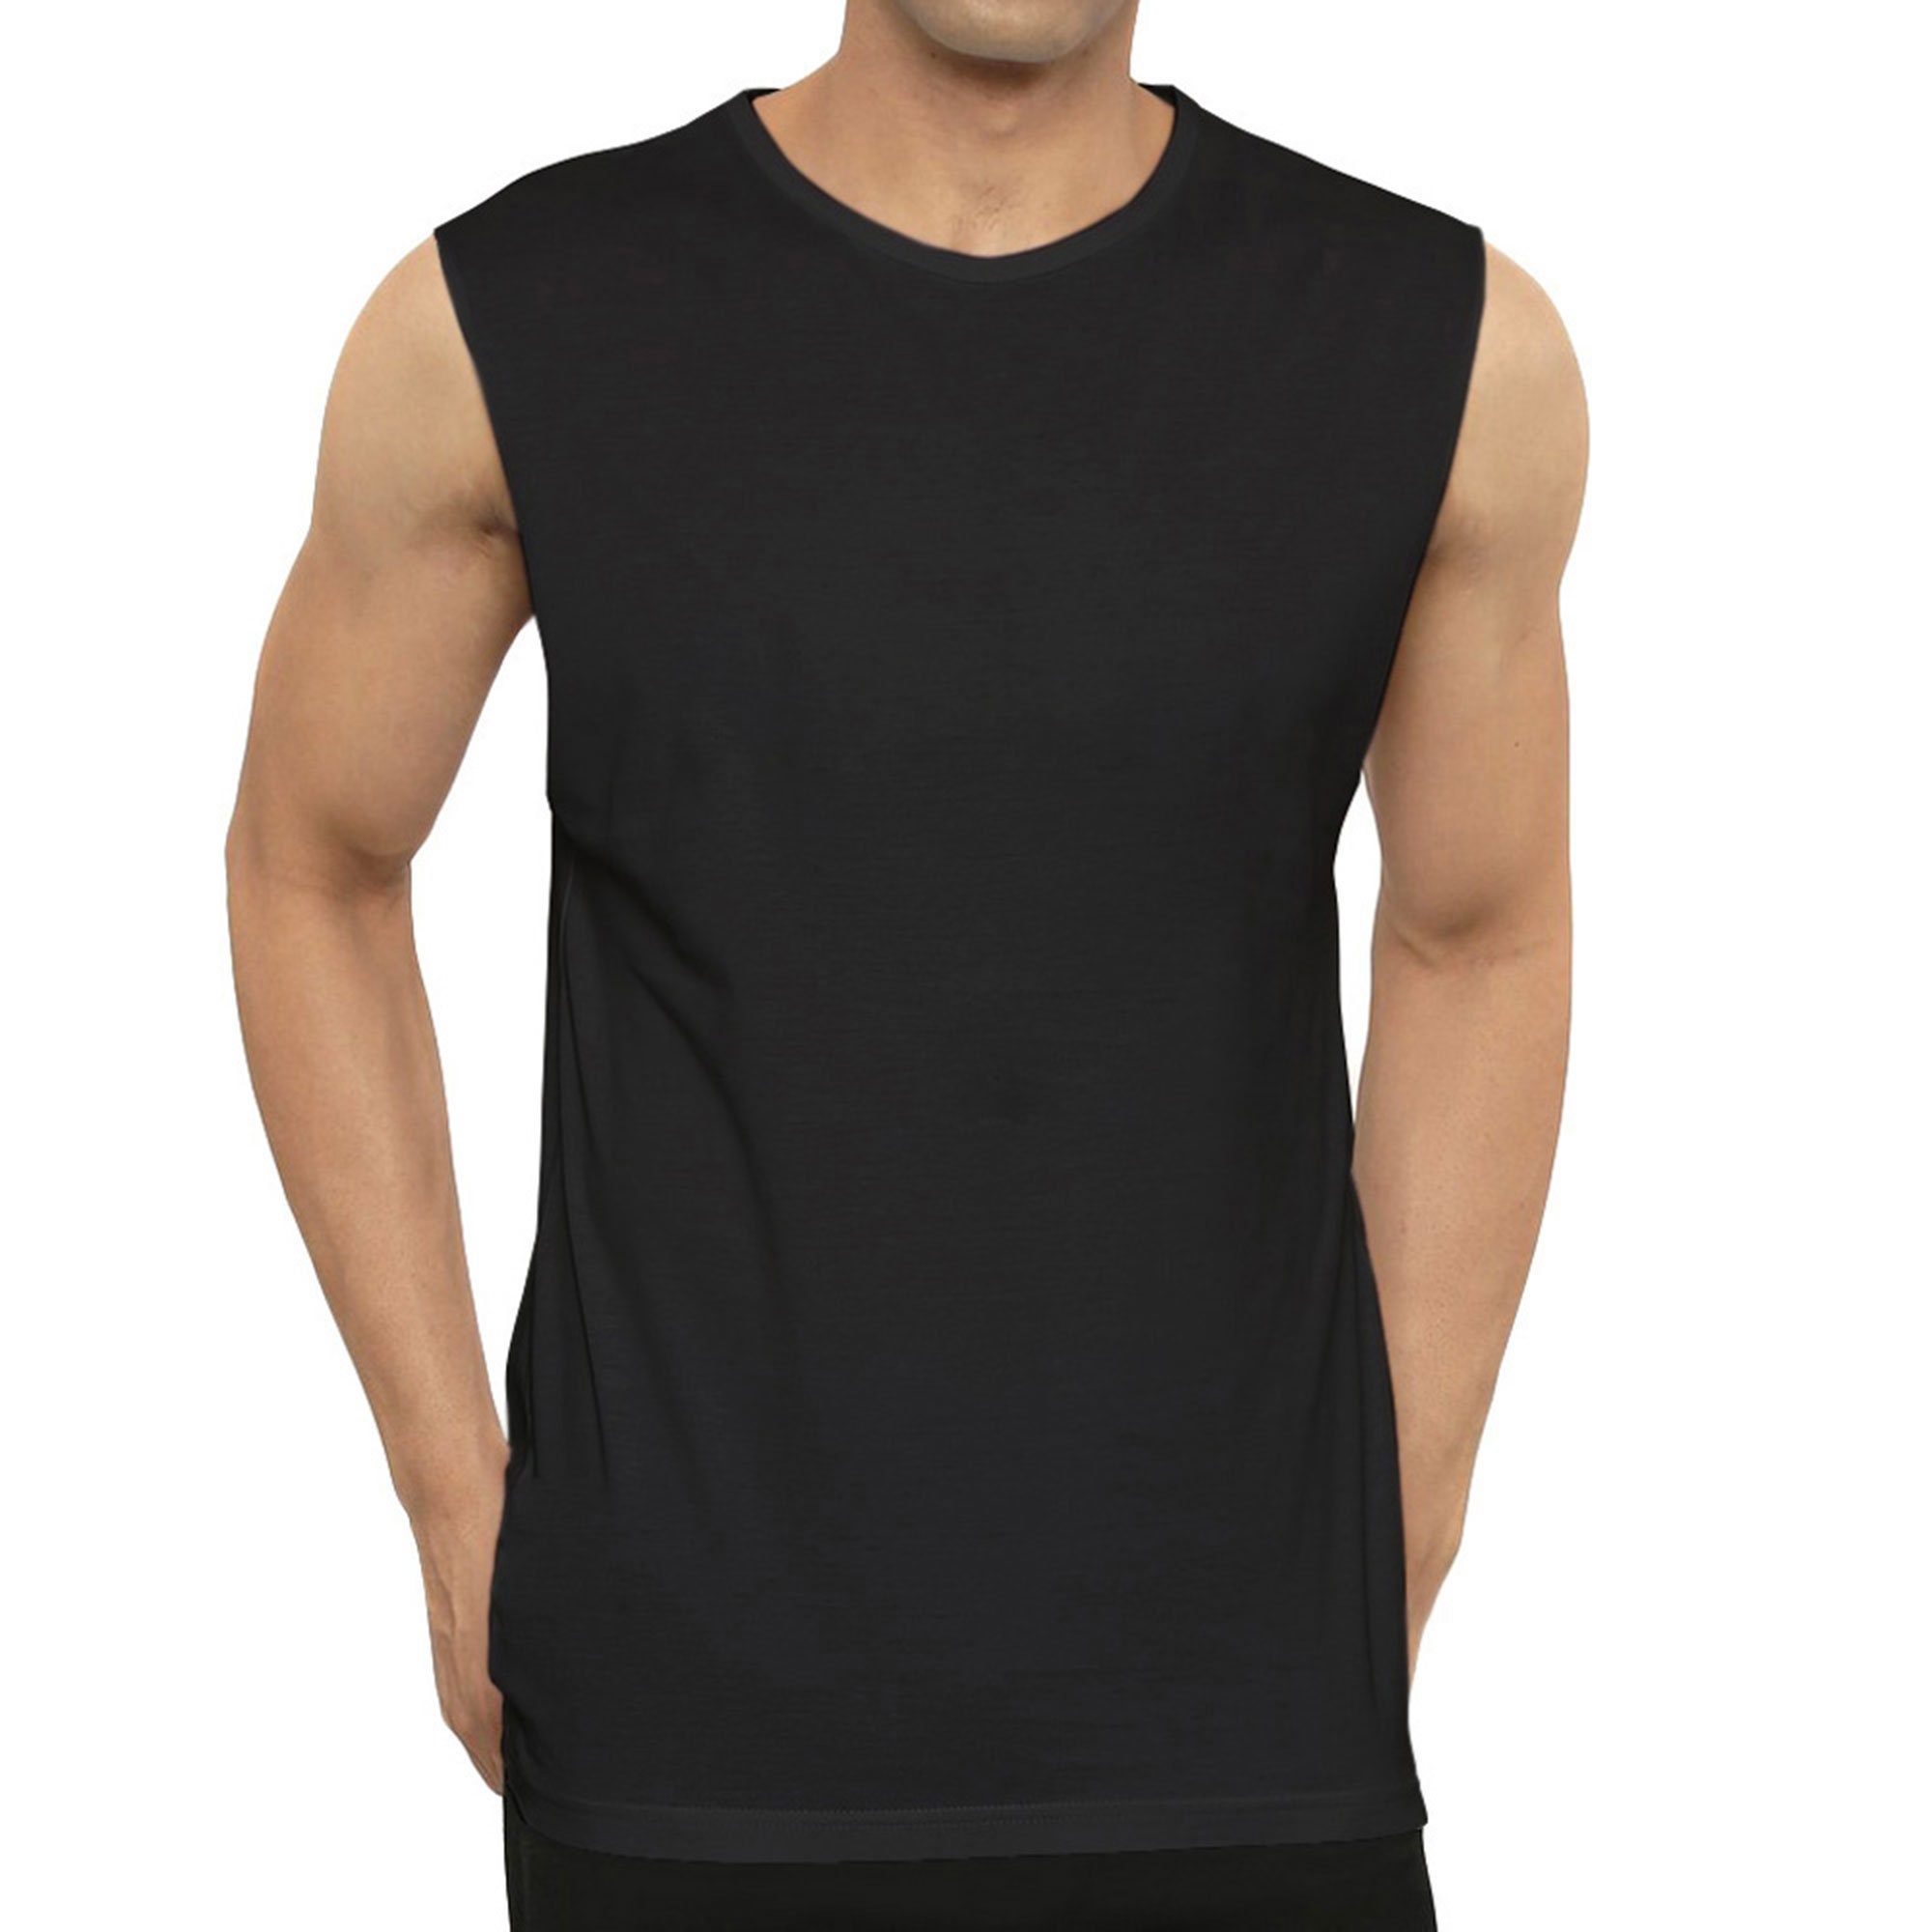 Blank Sleeveless T-shirt Men Custom-made Sleeveless T-shirt - Etsy